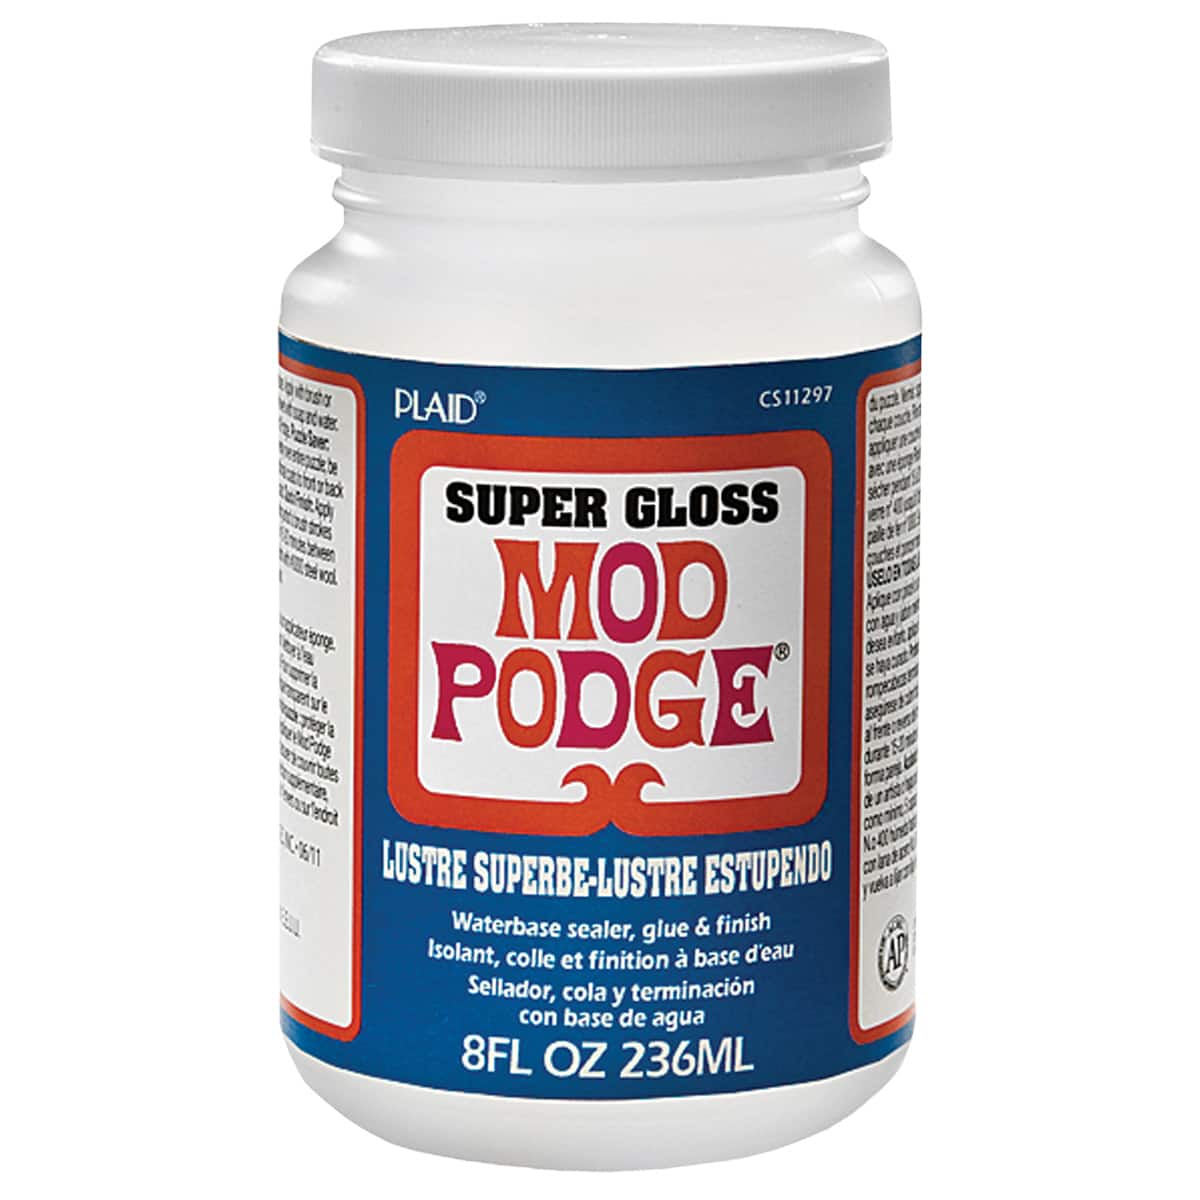 Mod Podge® Gloss Iridescent Acrylic Sealer, Michaels